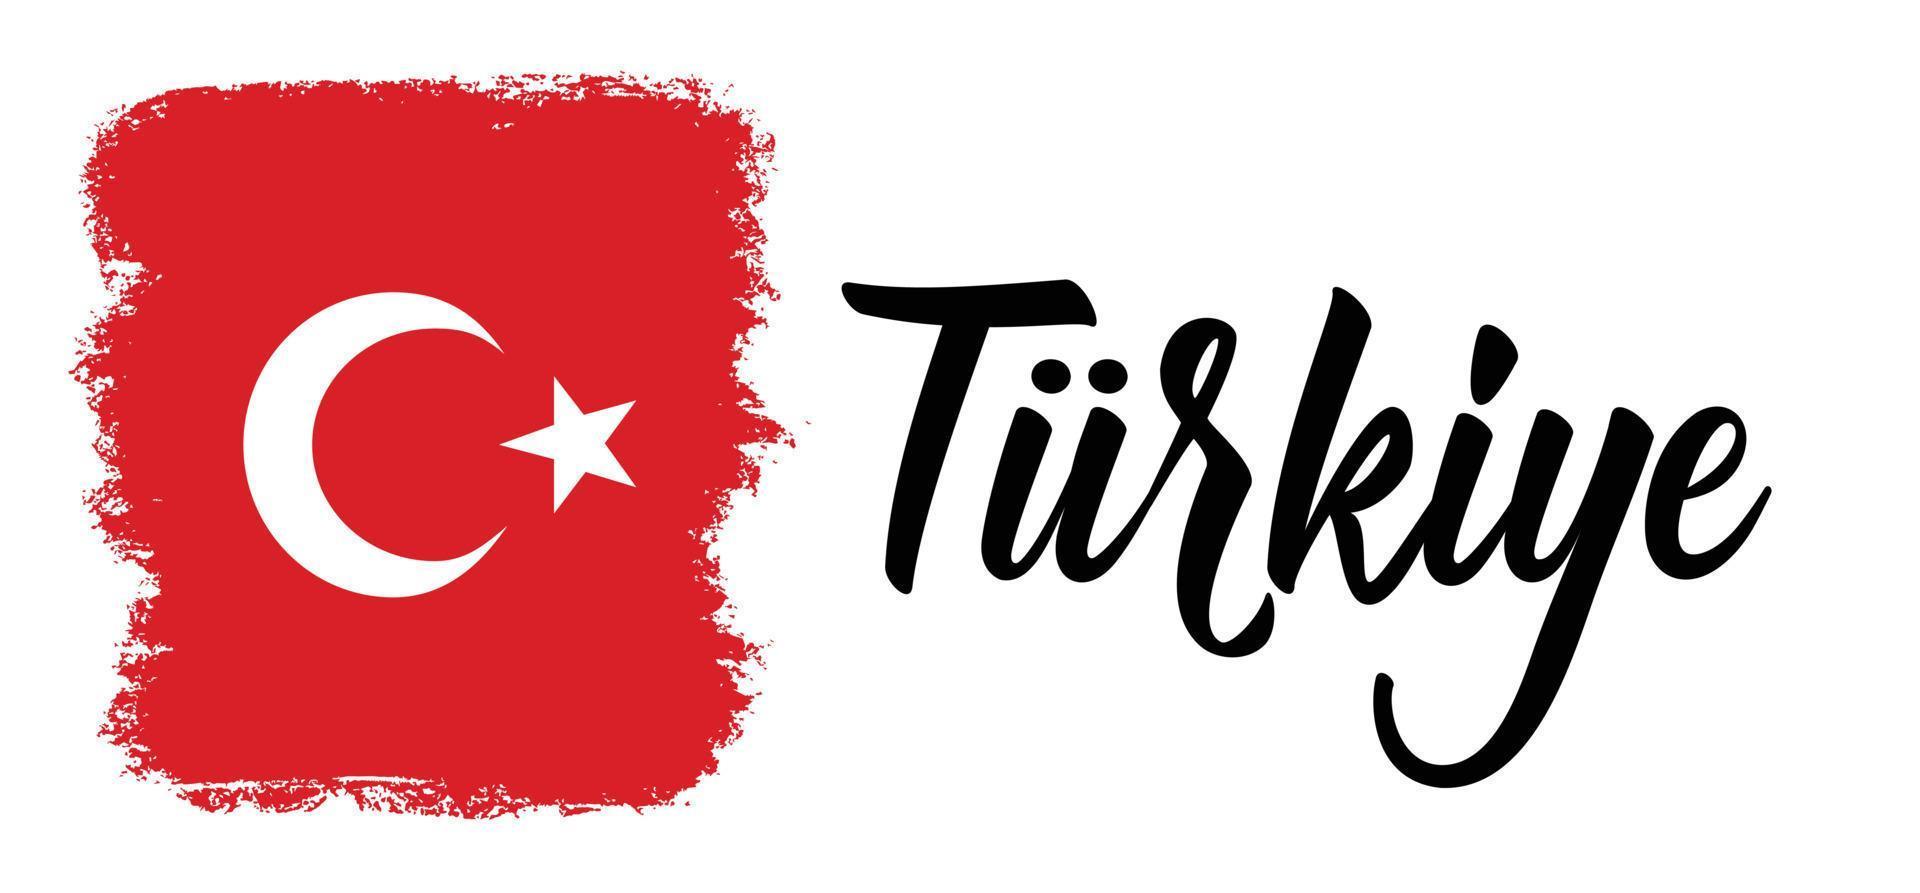 Turkiye - Turkey - banner with white star and crescent icon symbol of Turkish flag on grunge red background. New name, rebranding. Simple vector design. Made in Turkiye